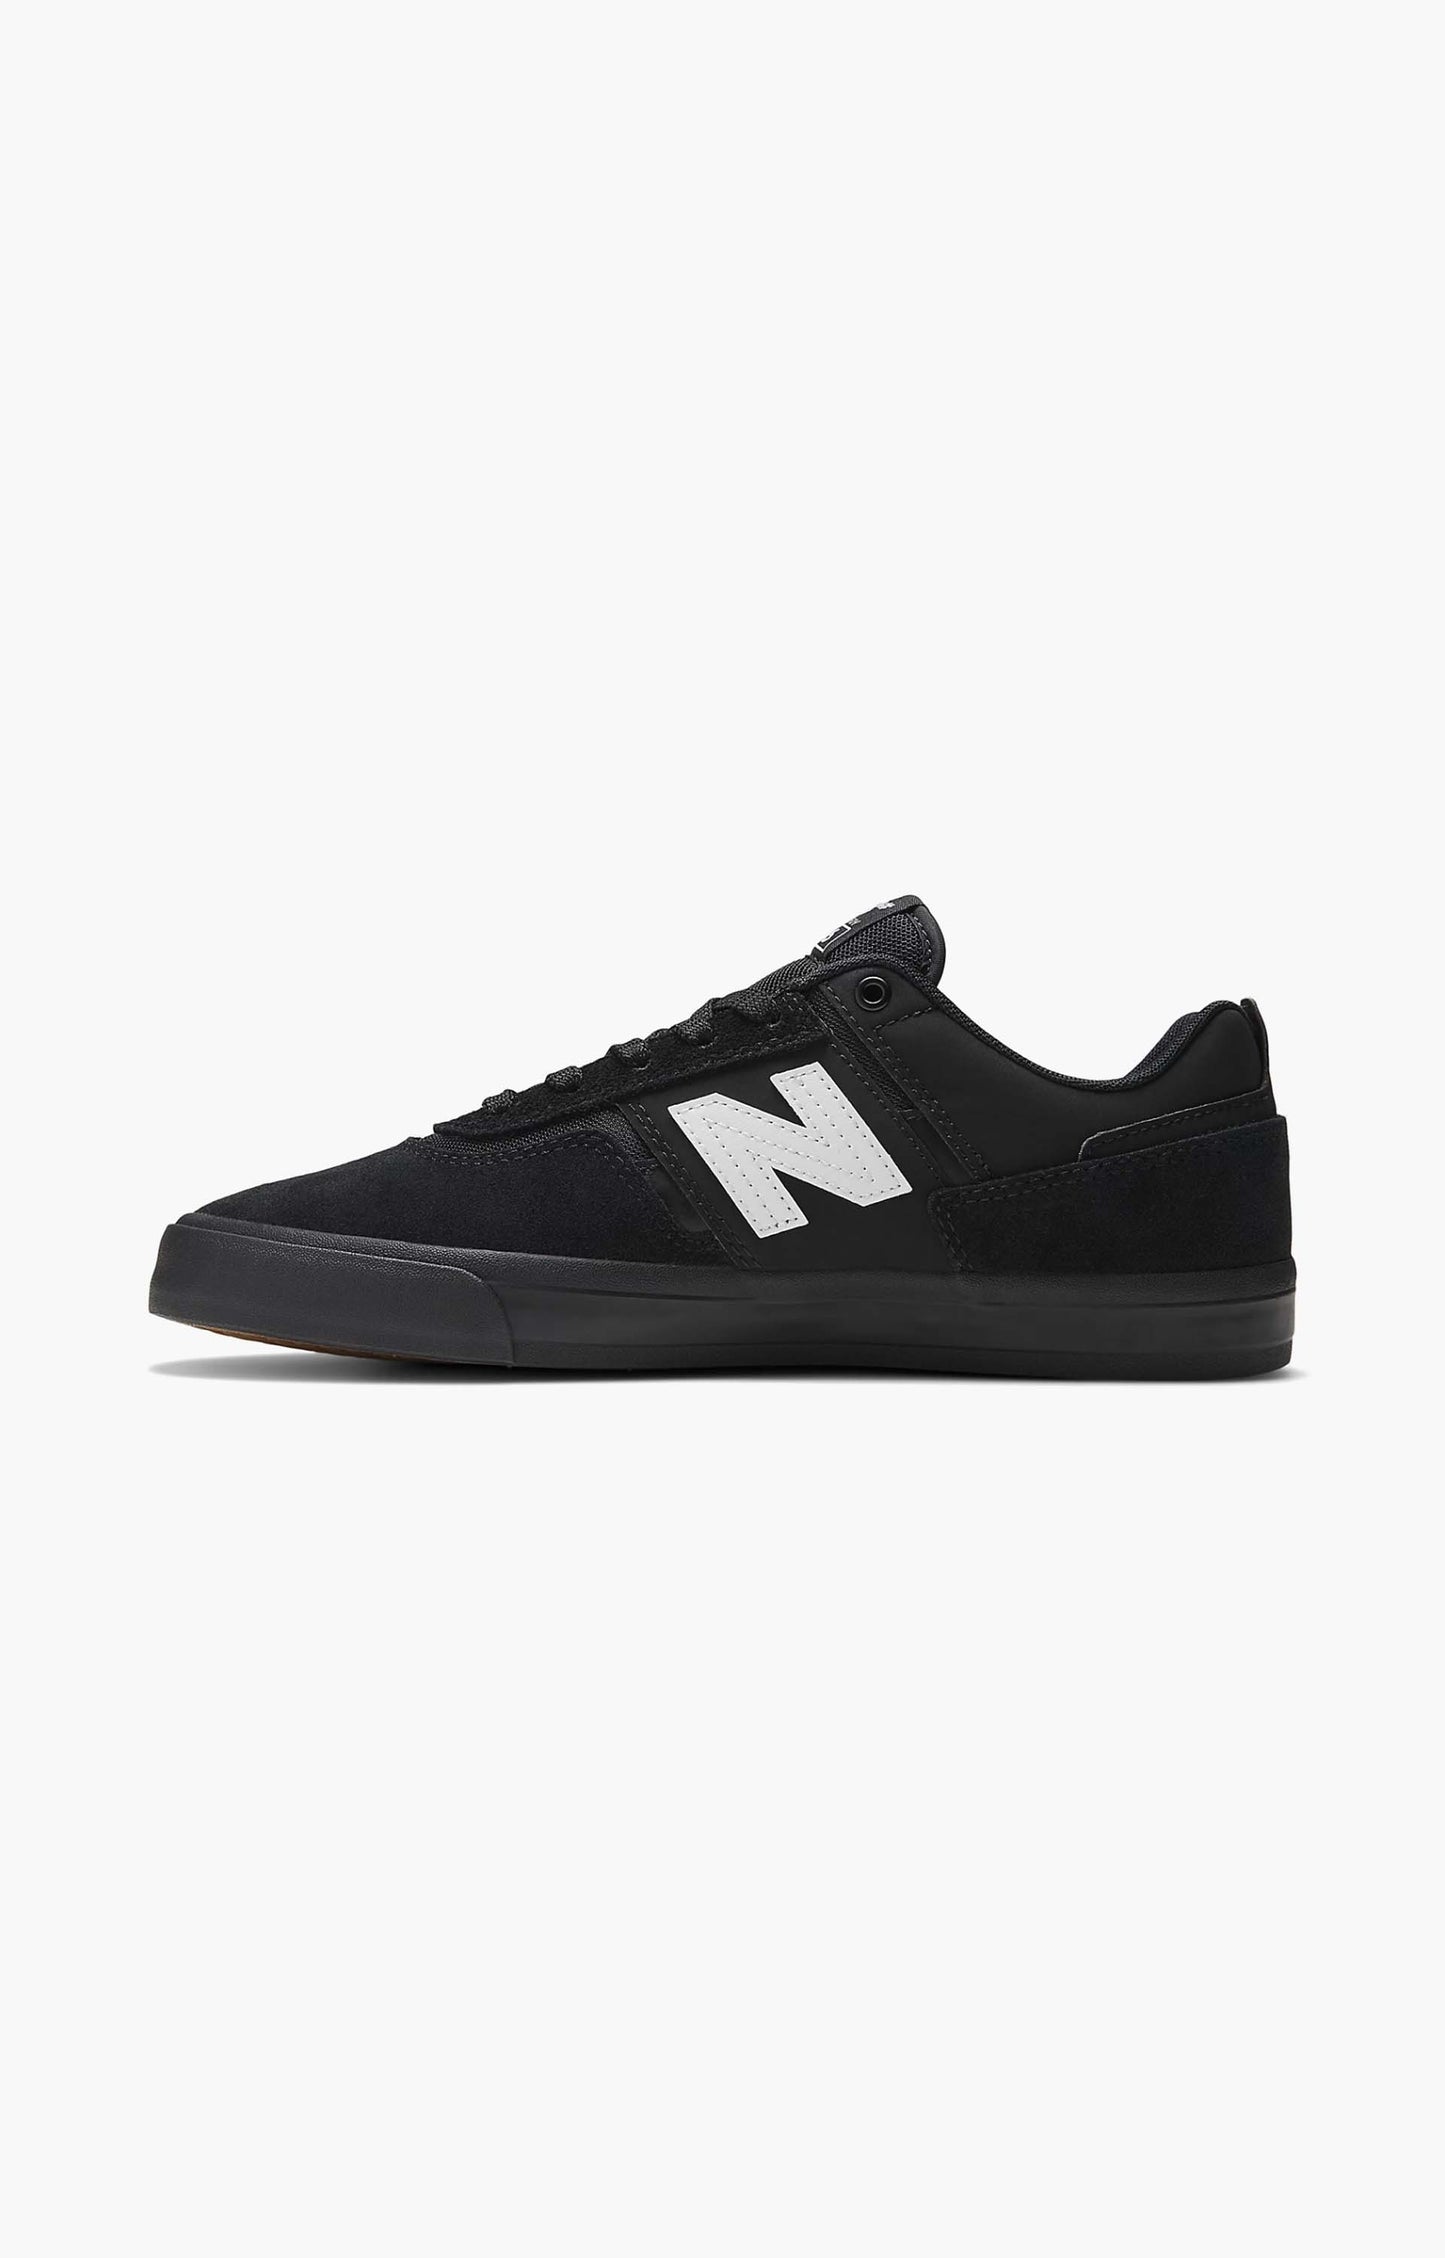 New Balance Numeric Jamie Foy NM306FDF Shoe, Black